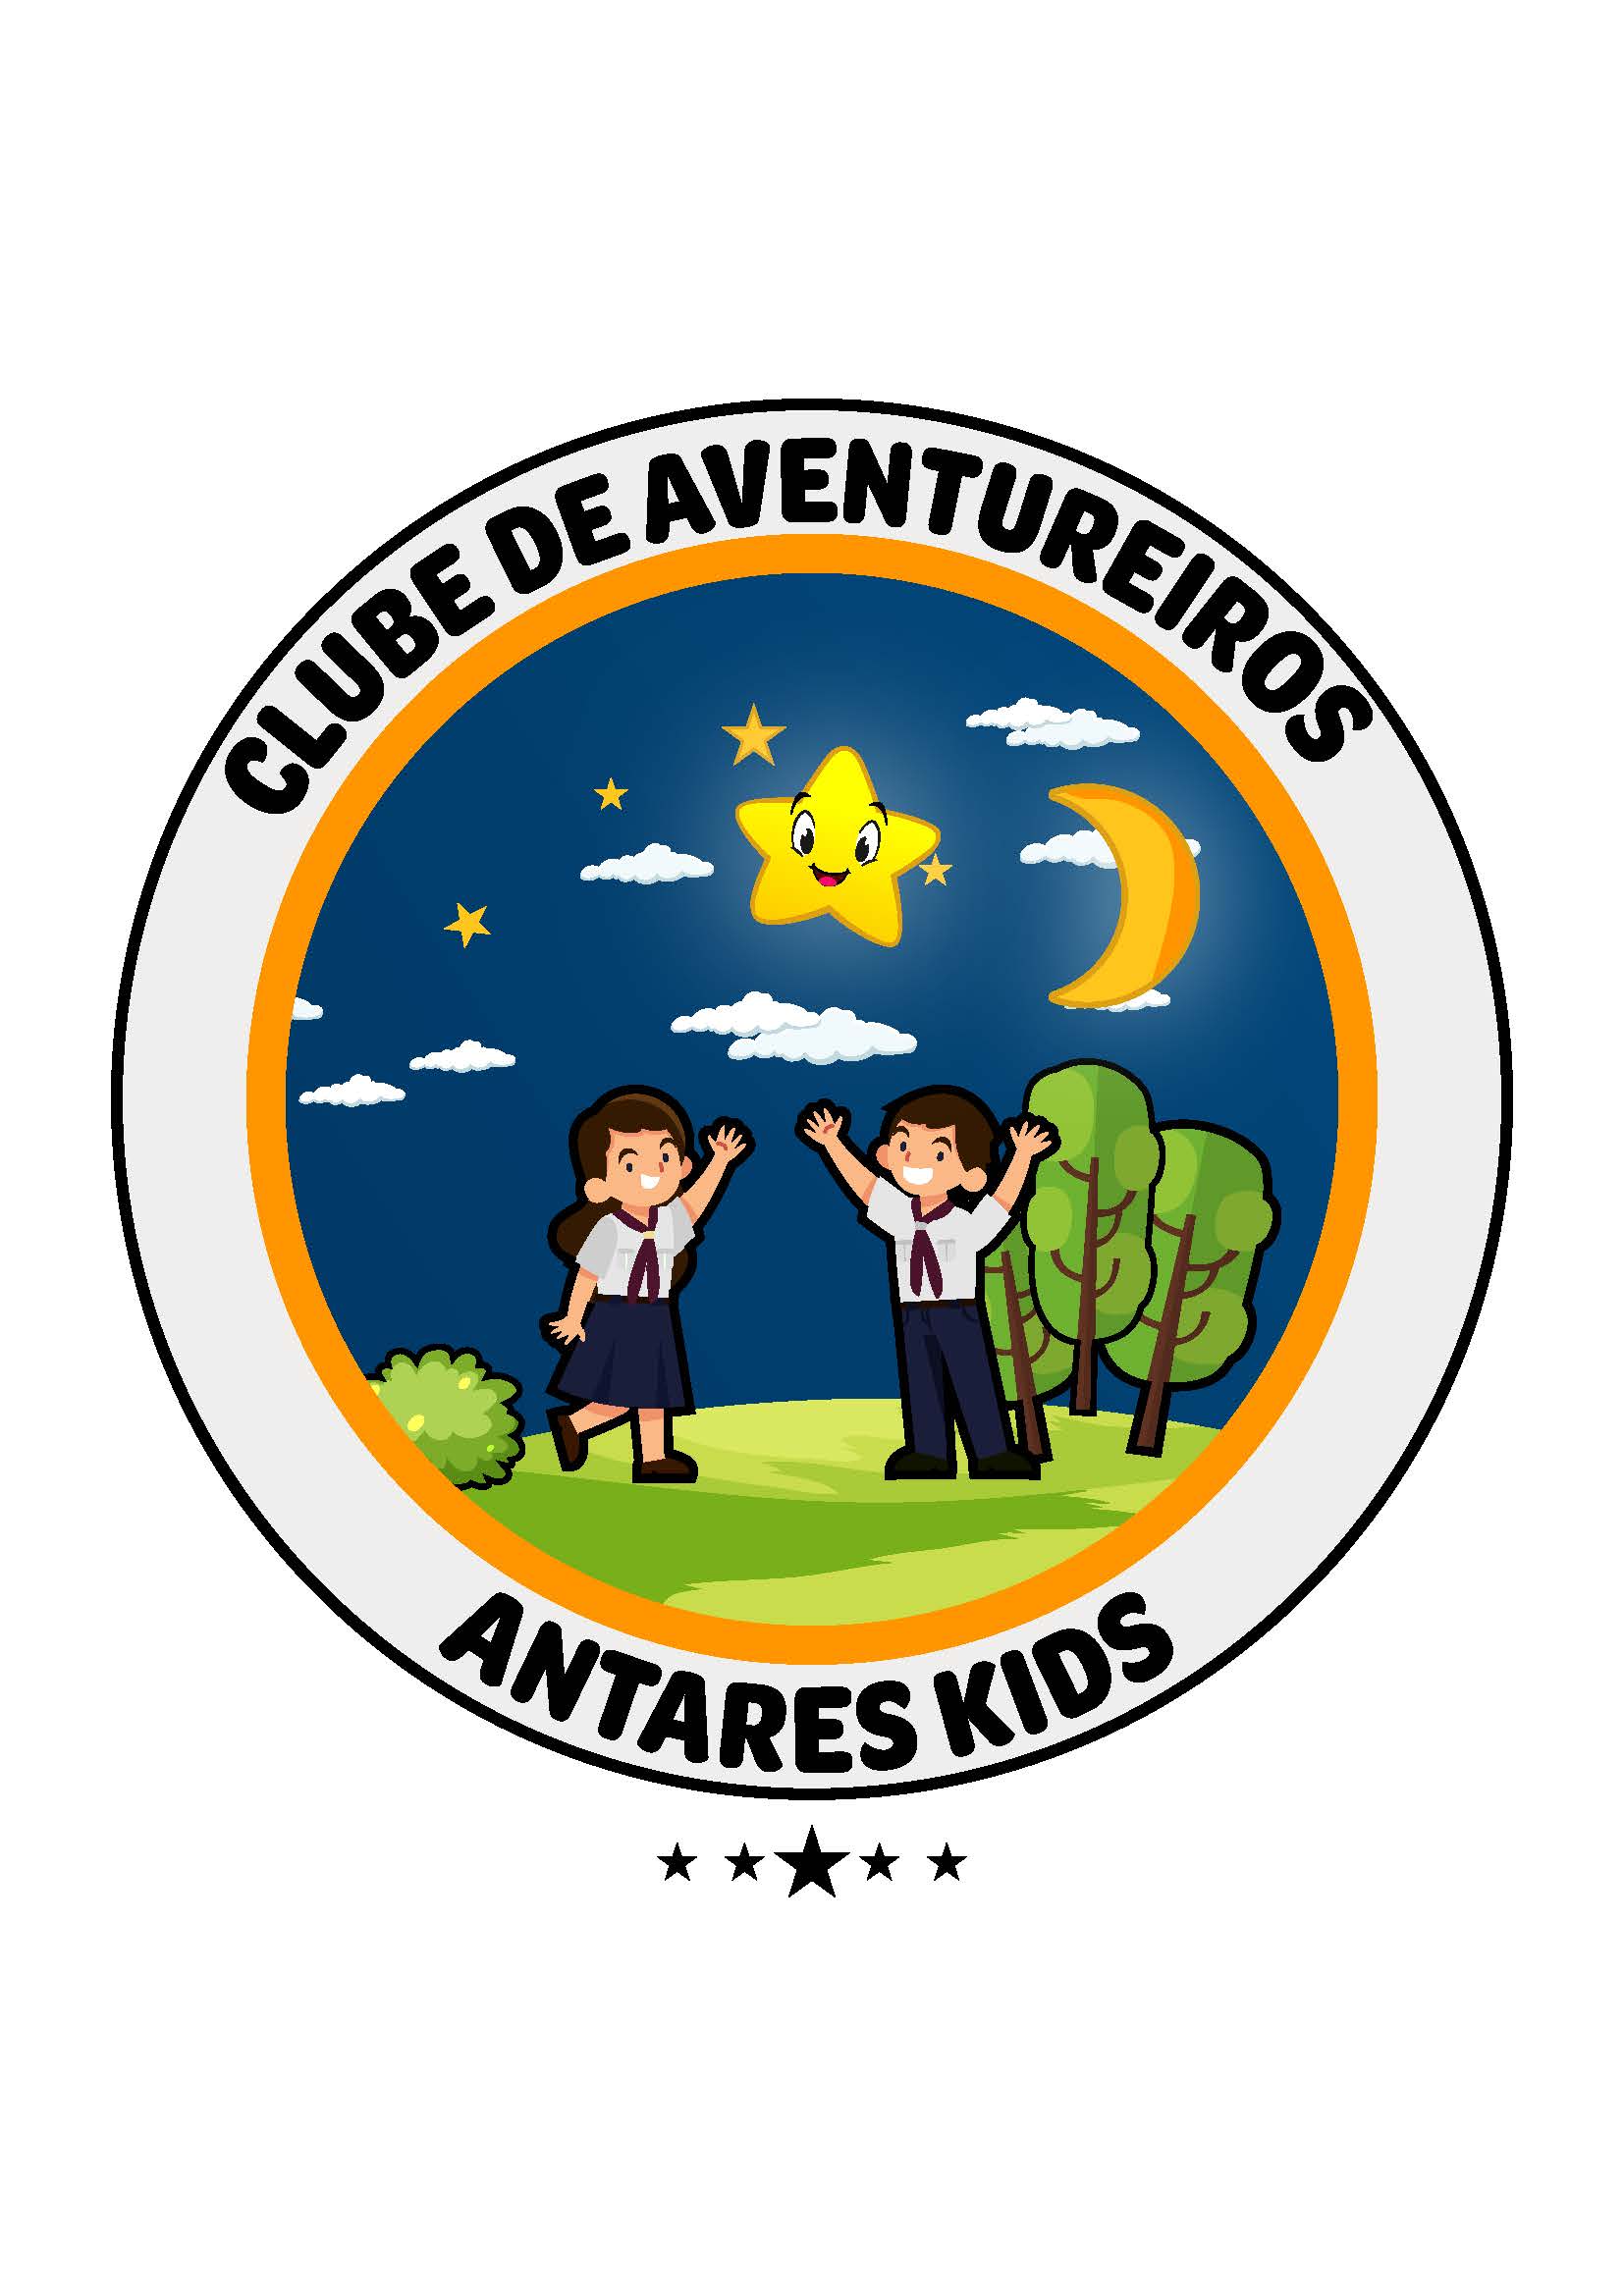 Antares Kids